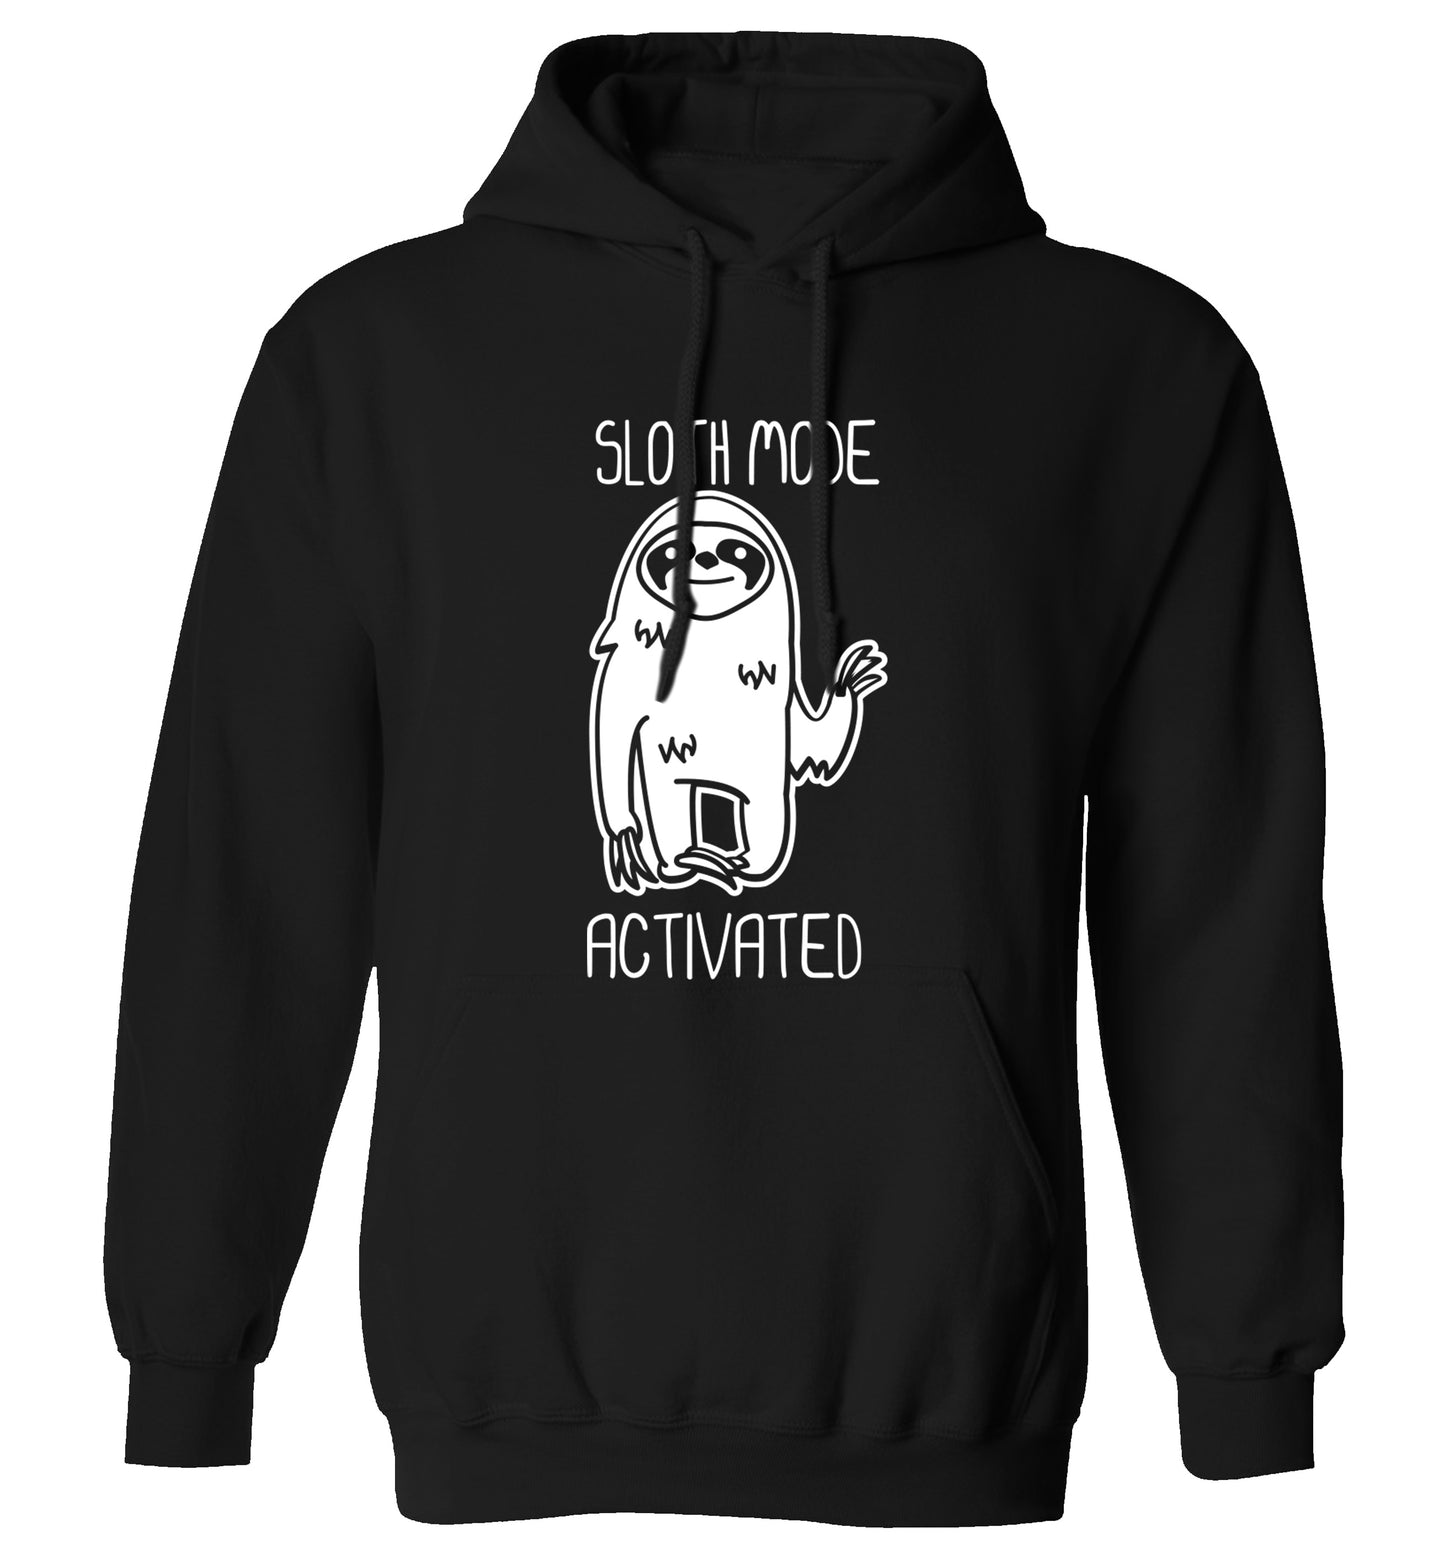 Sloth mode acitvated adults unisex black hoodie 2XL